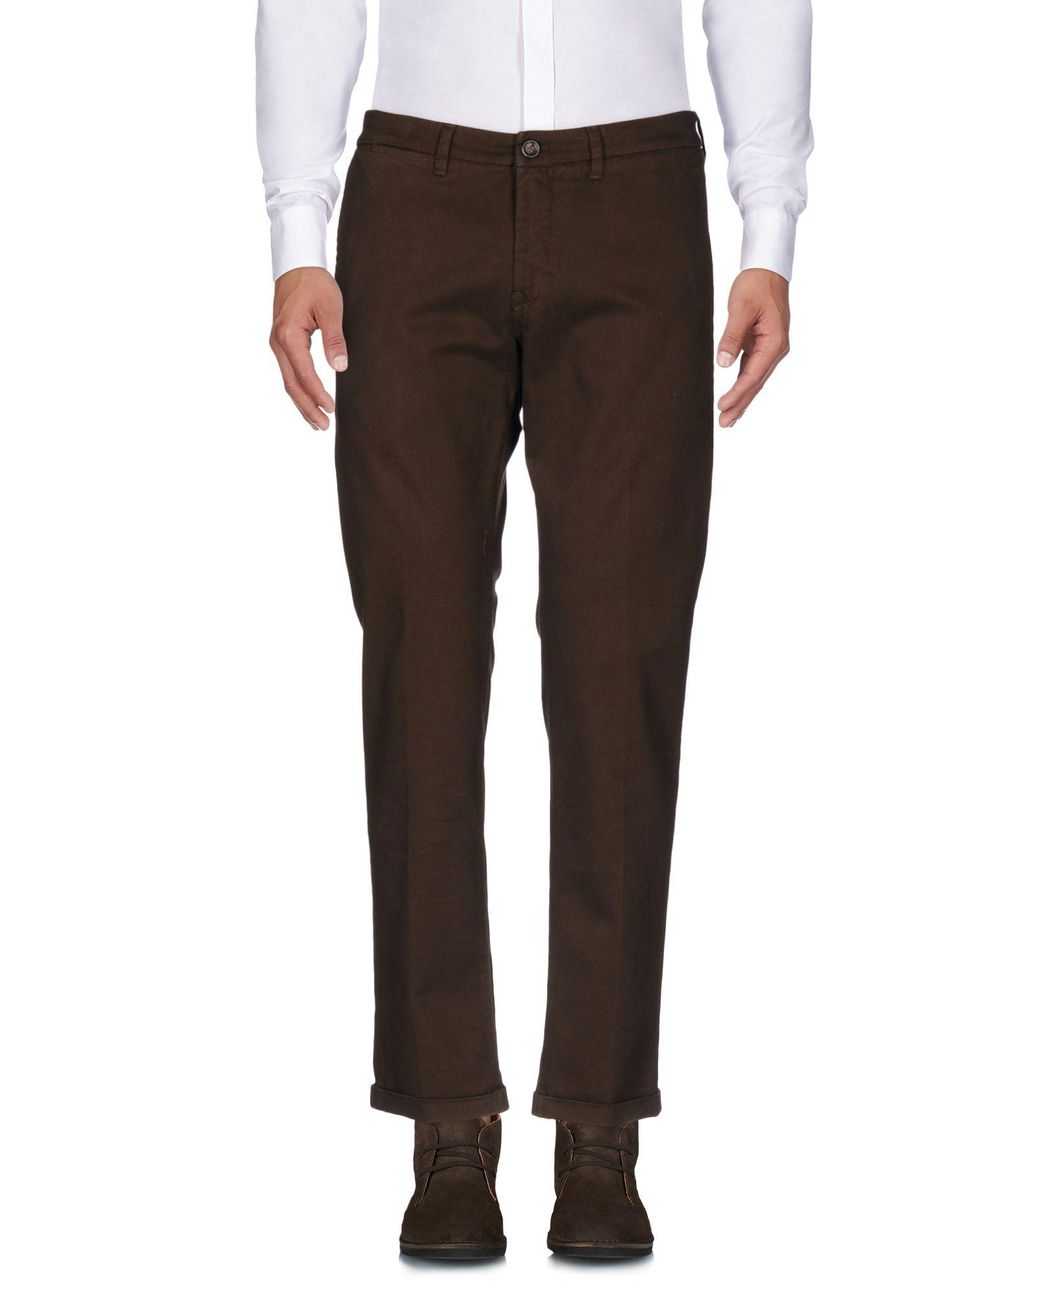 Lyst - Re-Hash Casual Pants in Brown for Men